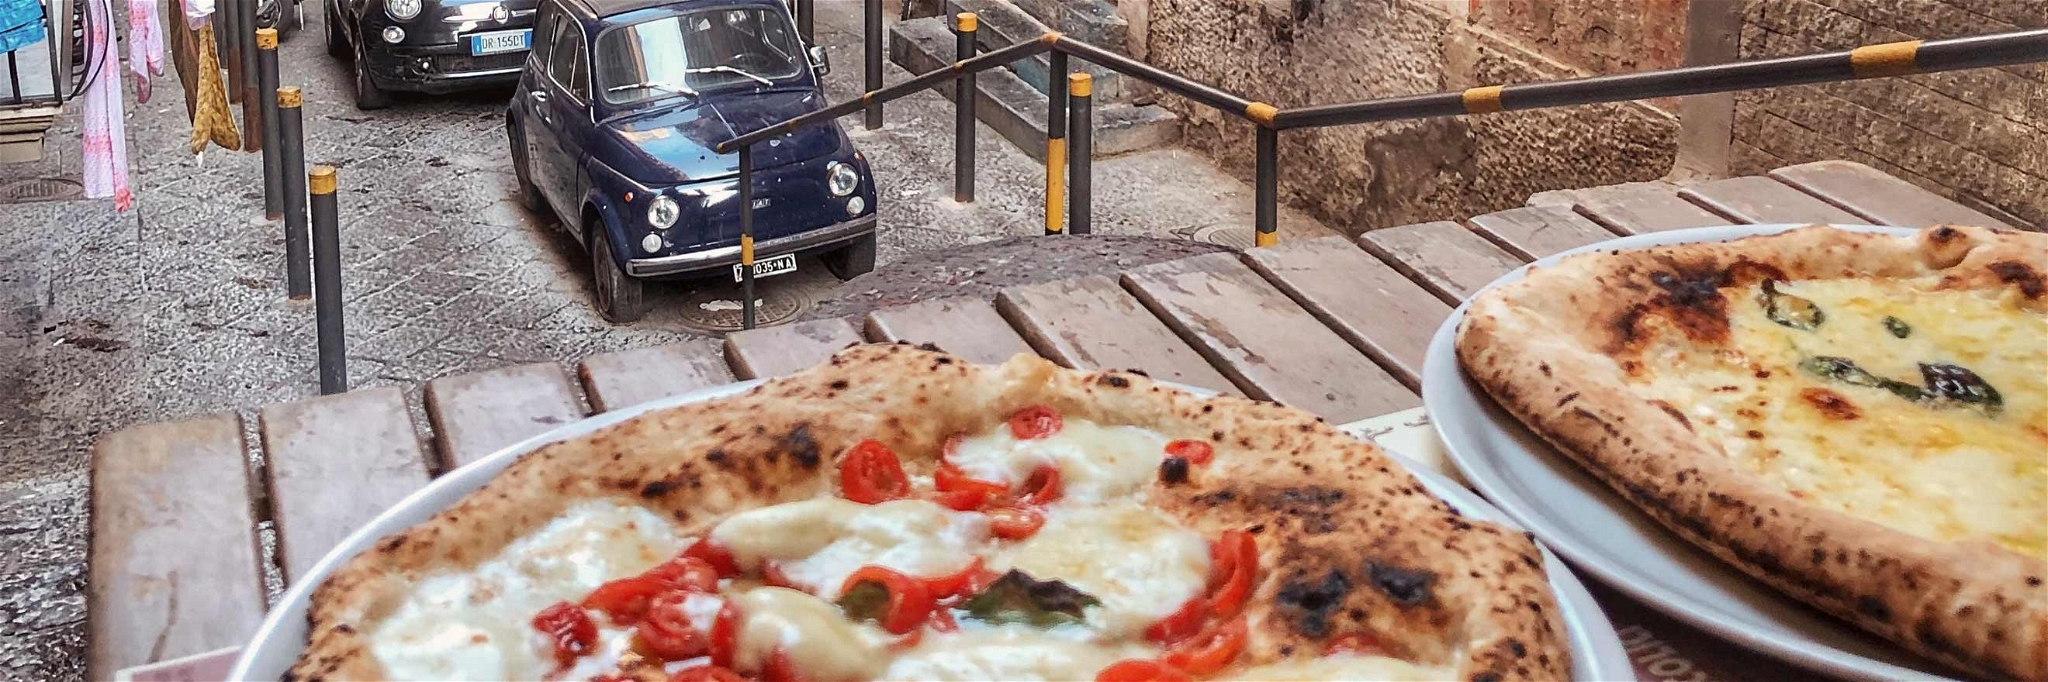 Pizza wie in Neapel gibt es jetzt in Wien Ottakring